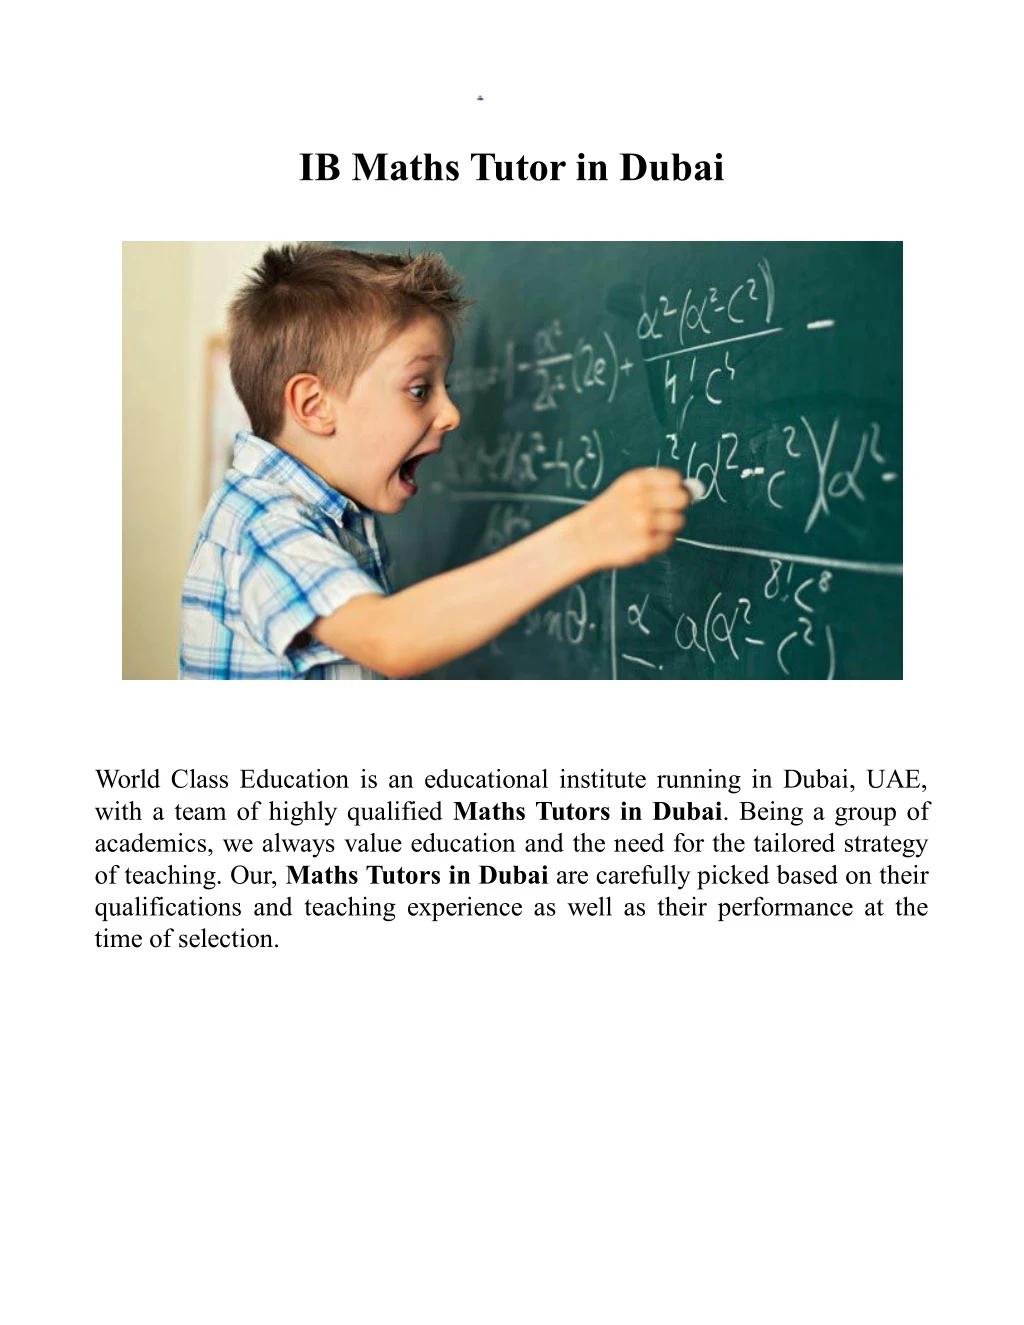 ib maths tutor in dubai